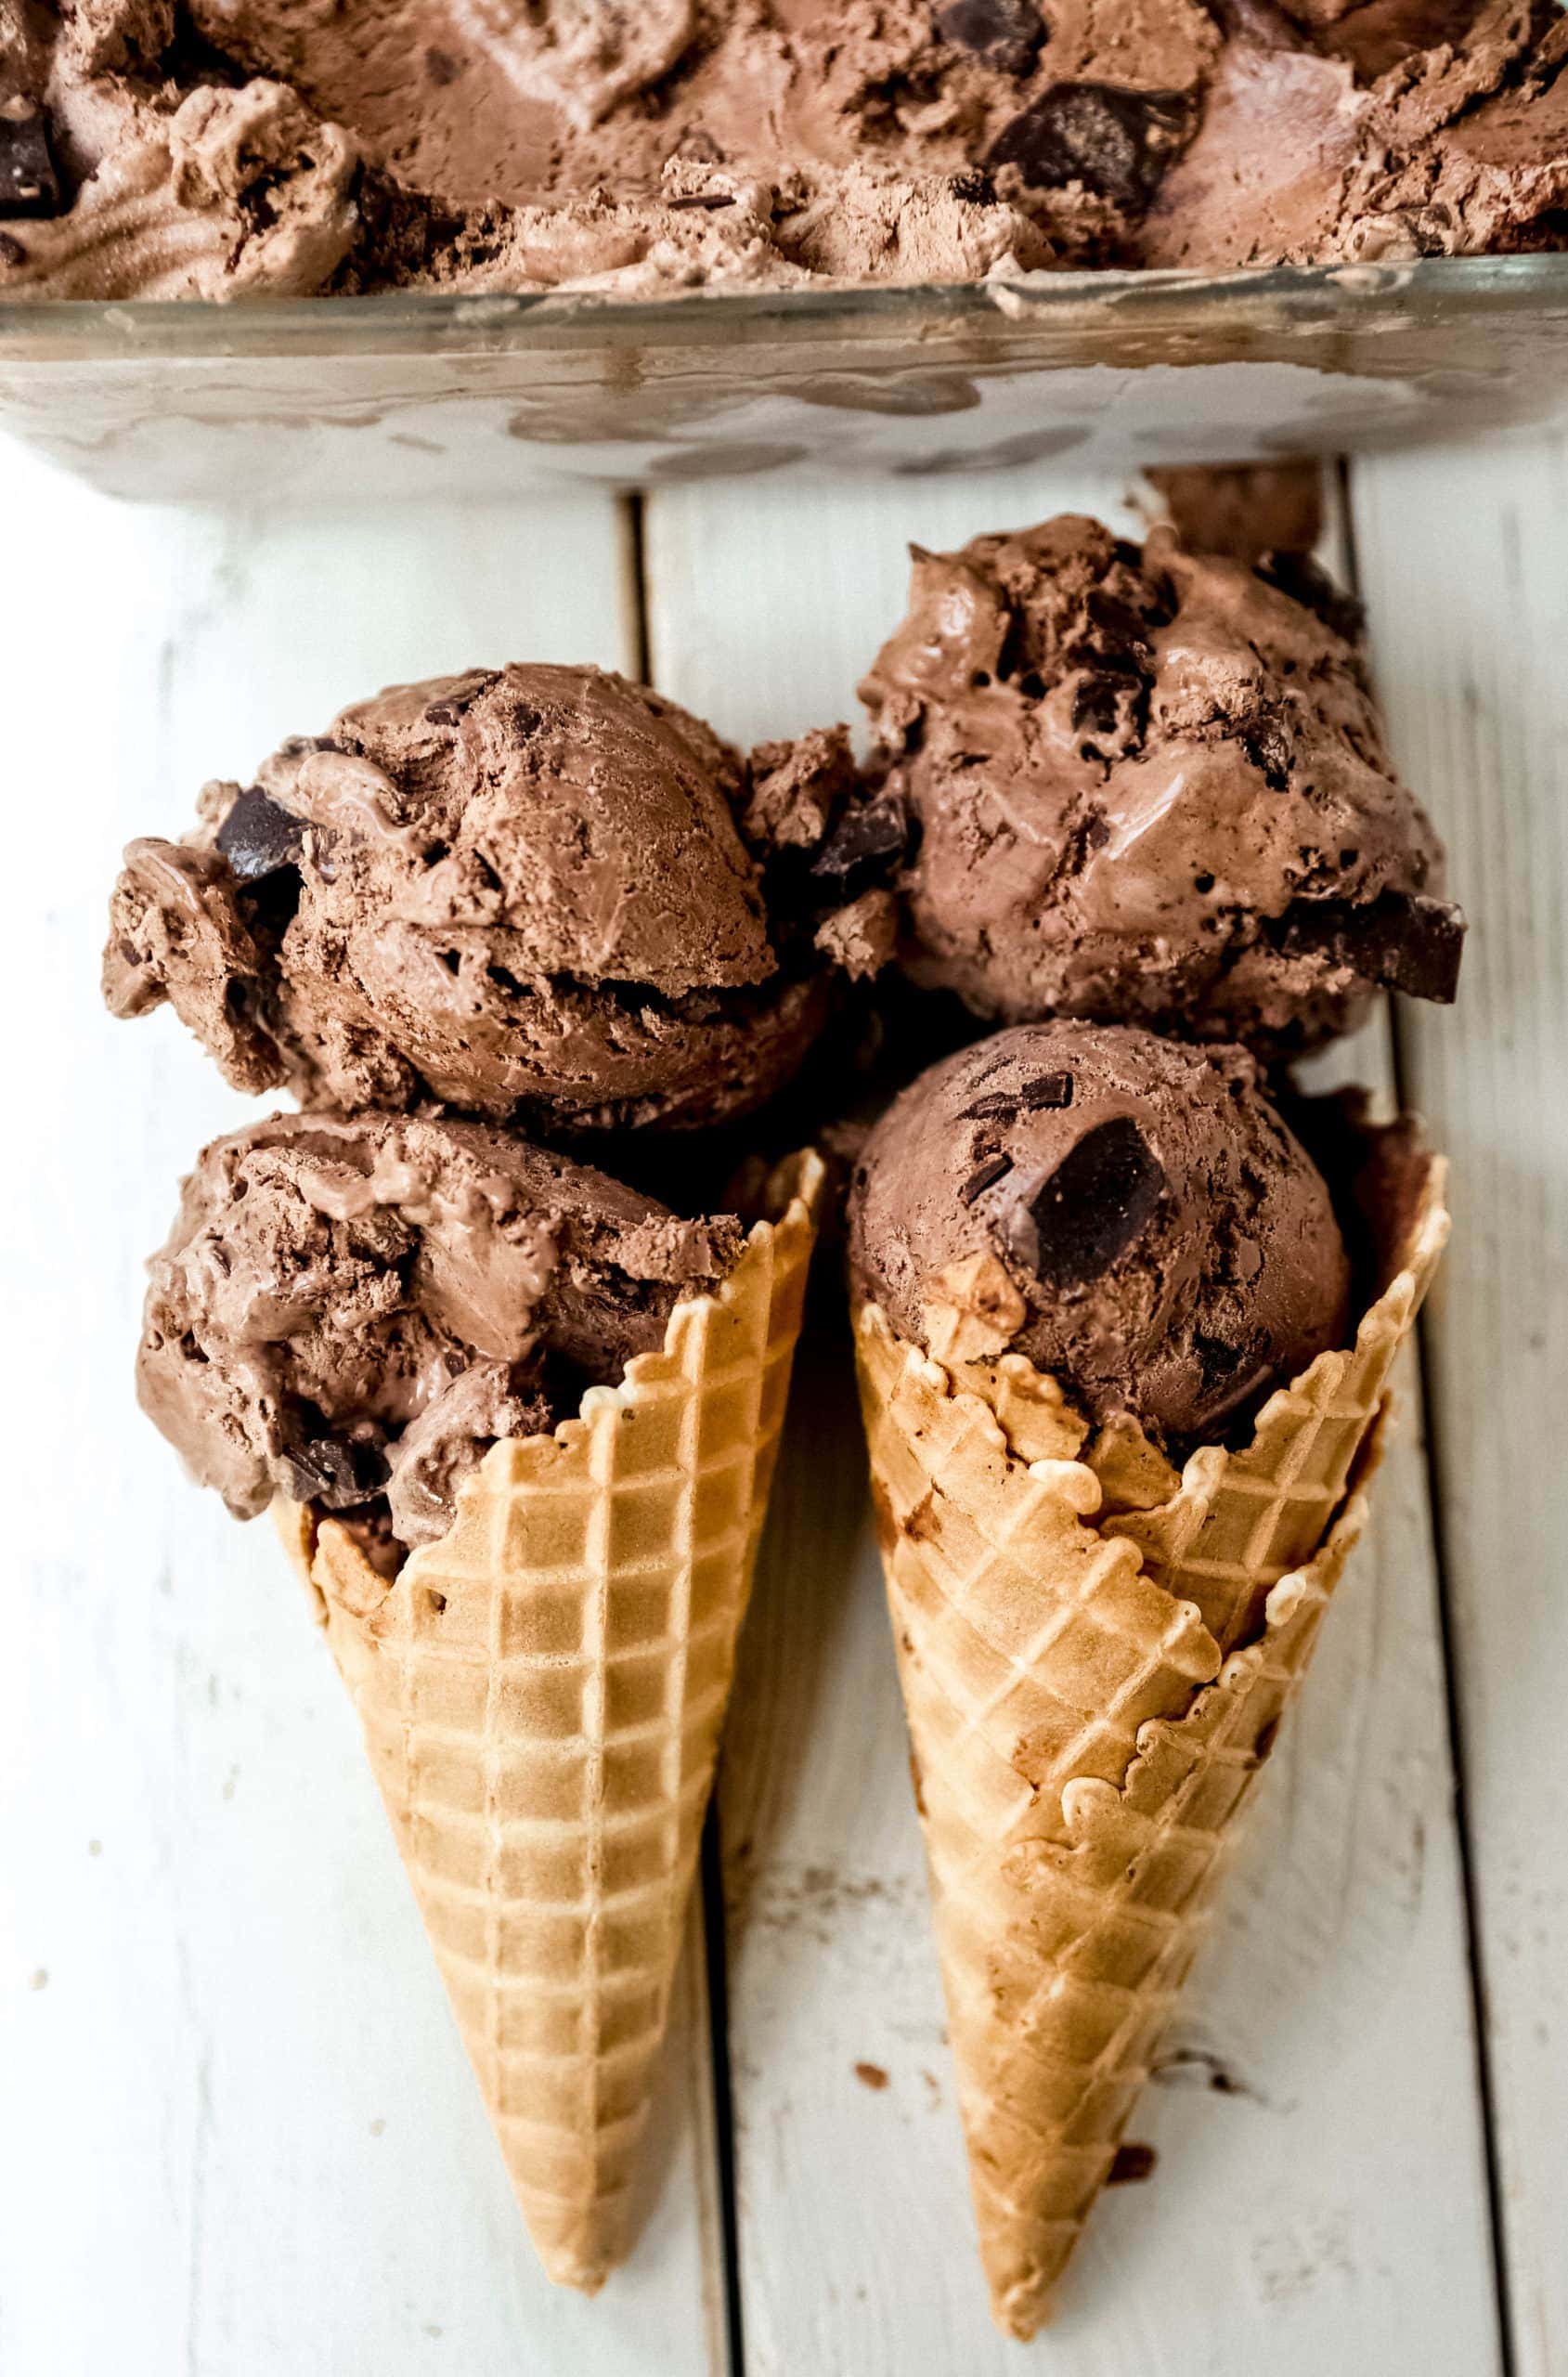 https://www.modernhoney.com/wp-content/uploads/2020/09/No-Churn-Chocolate-Chunk-Ice-Cream-5-edit-scaled.jpg